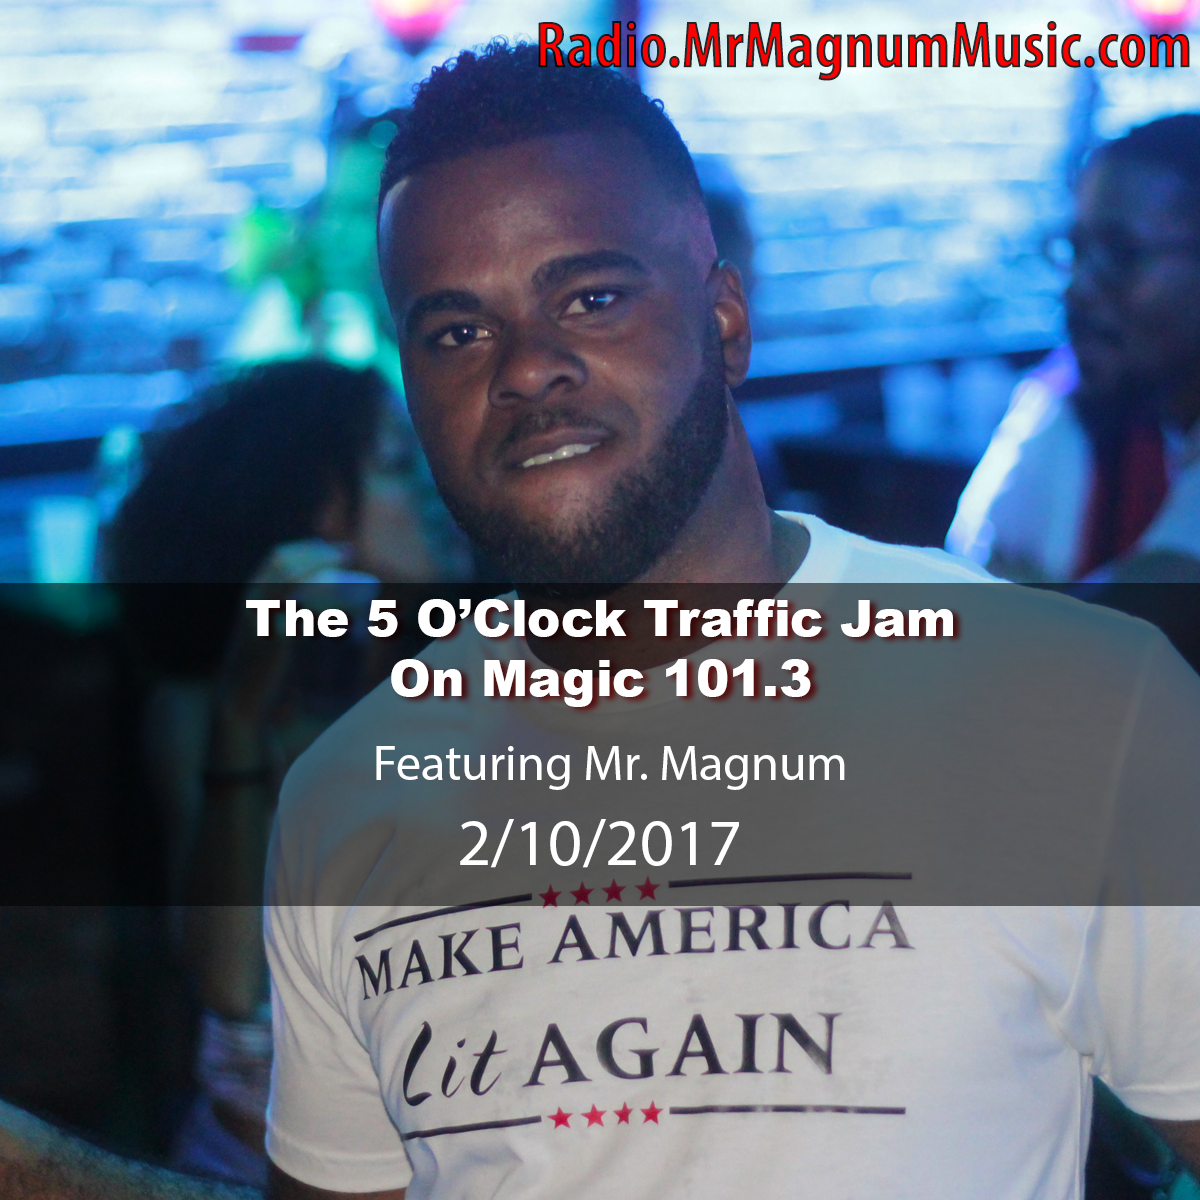 The 5 O’Clock Traffic Jam 2-10-2017 on Magic 101.3